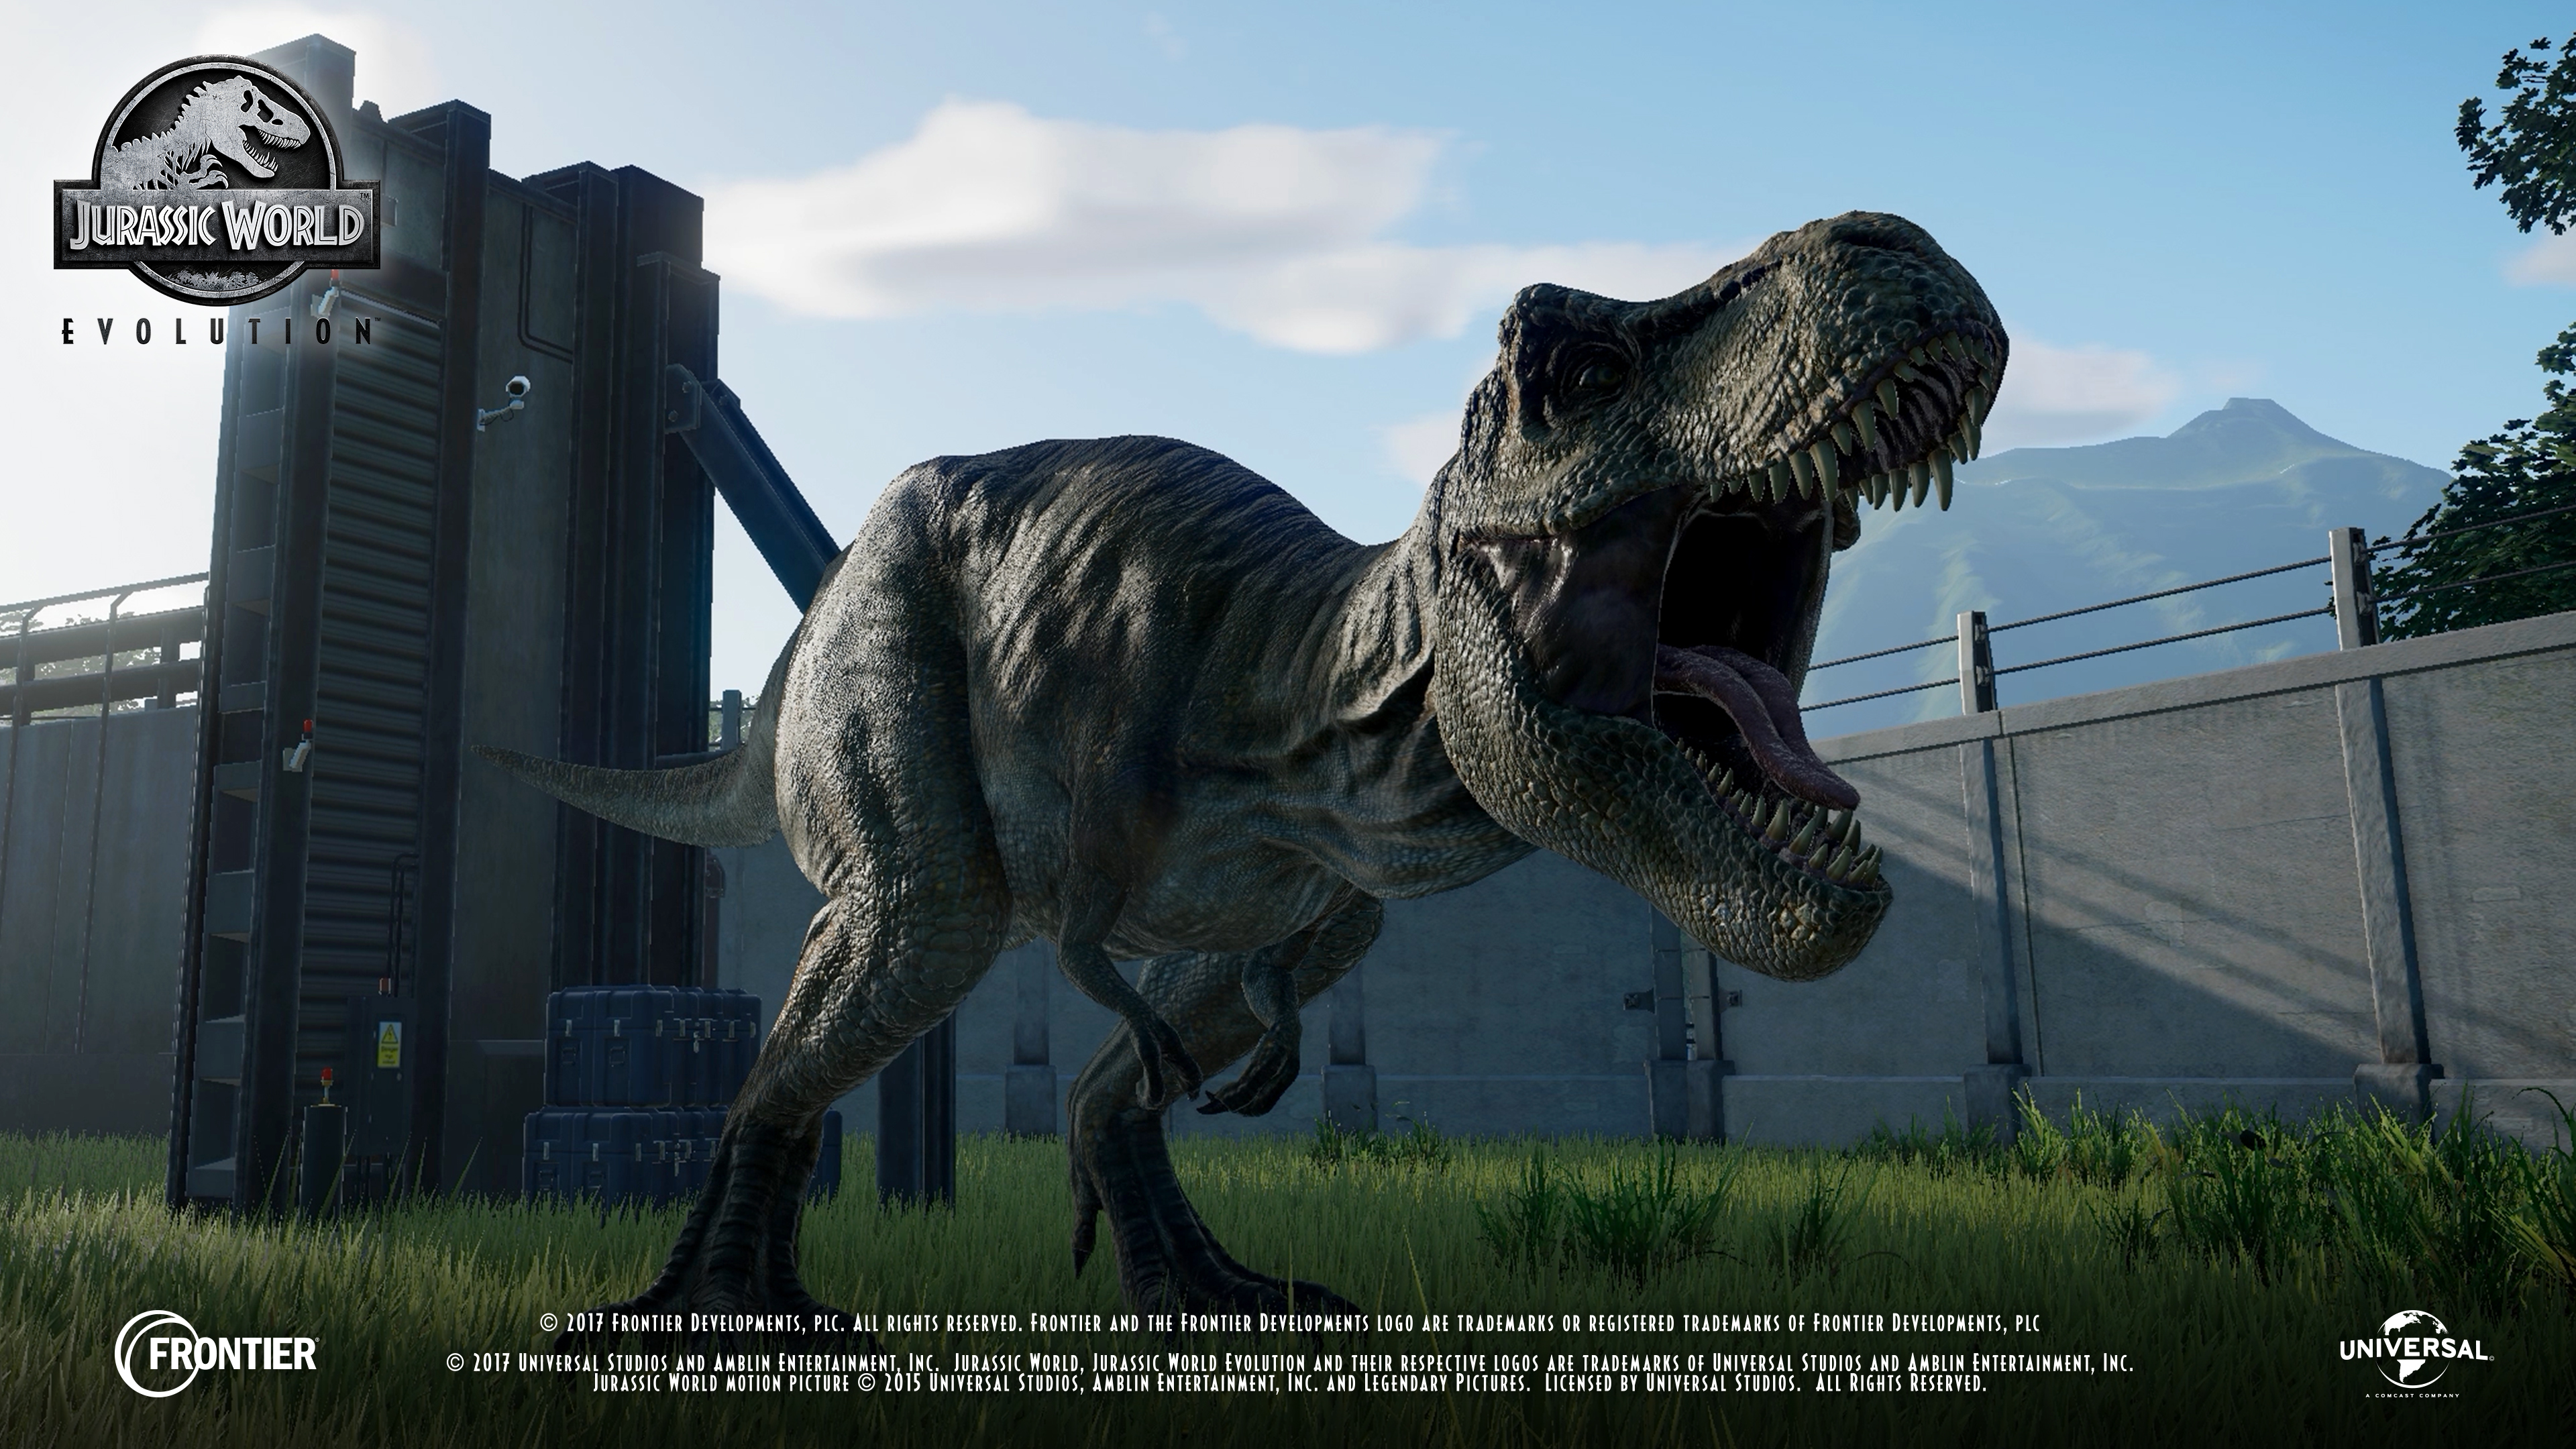 Dino T-Rex RTX – Apps on Google Play